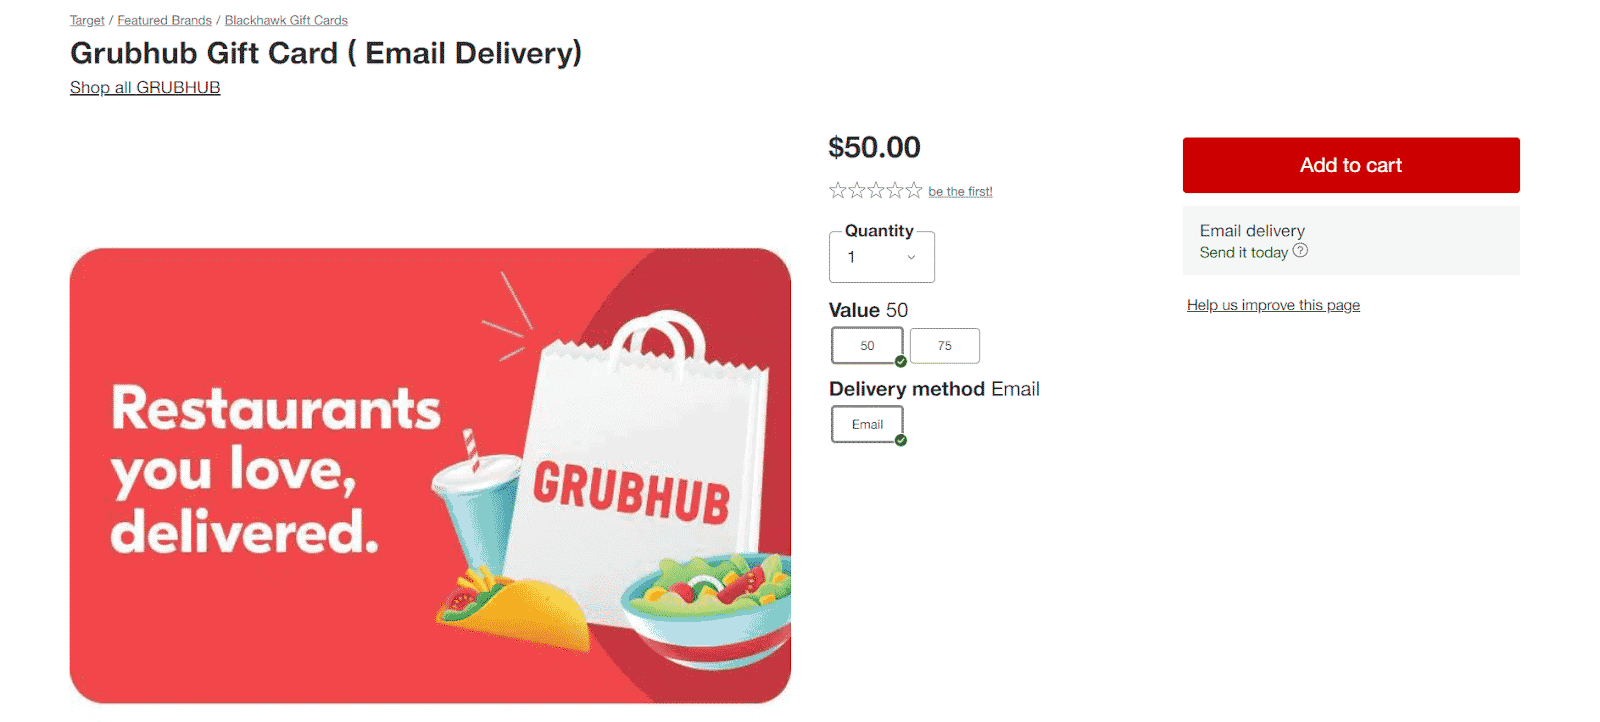 Target Grubhub gift card purchase